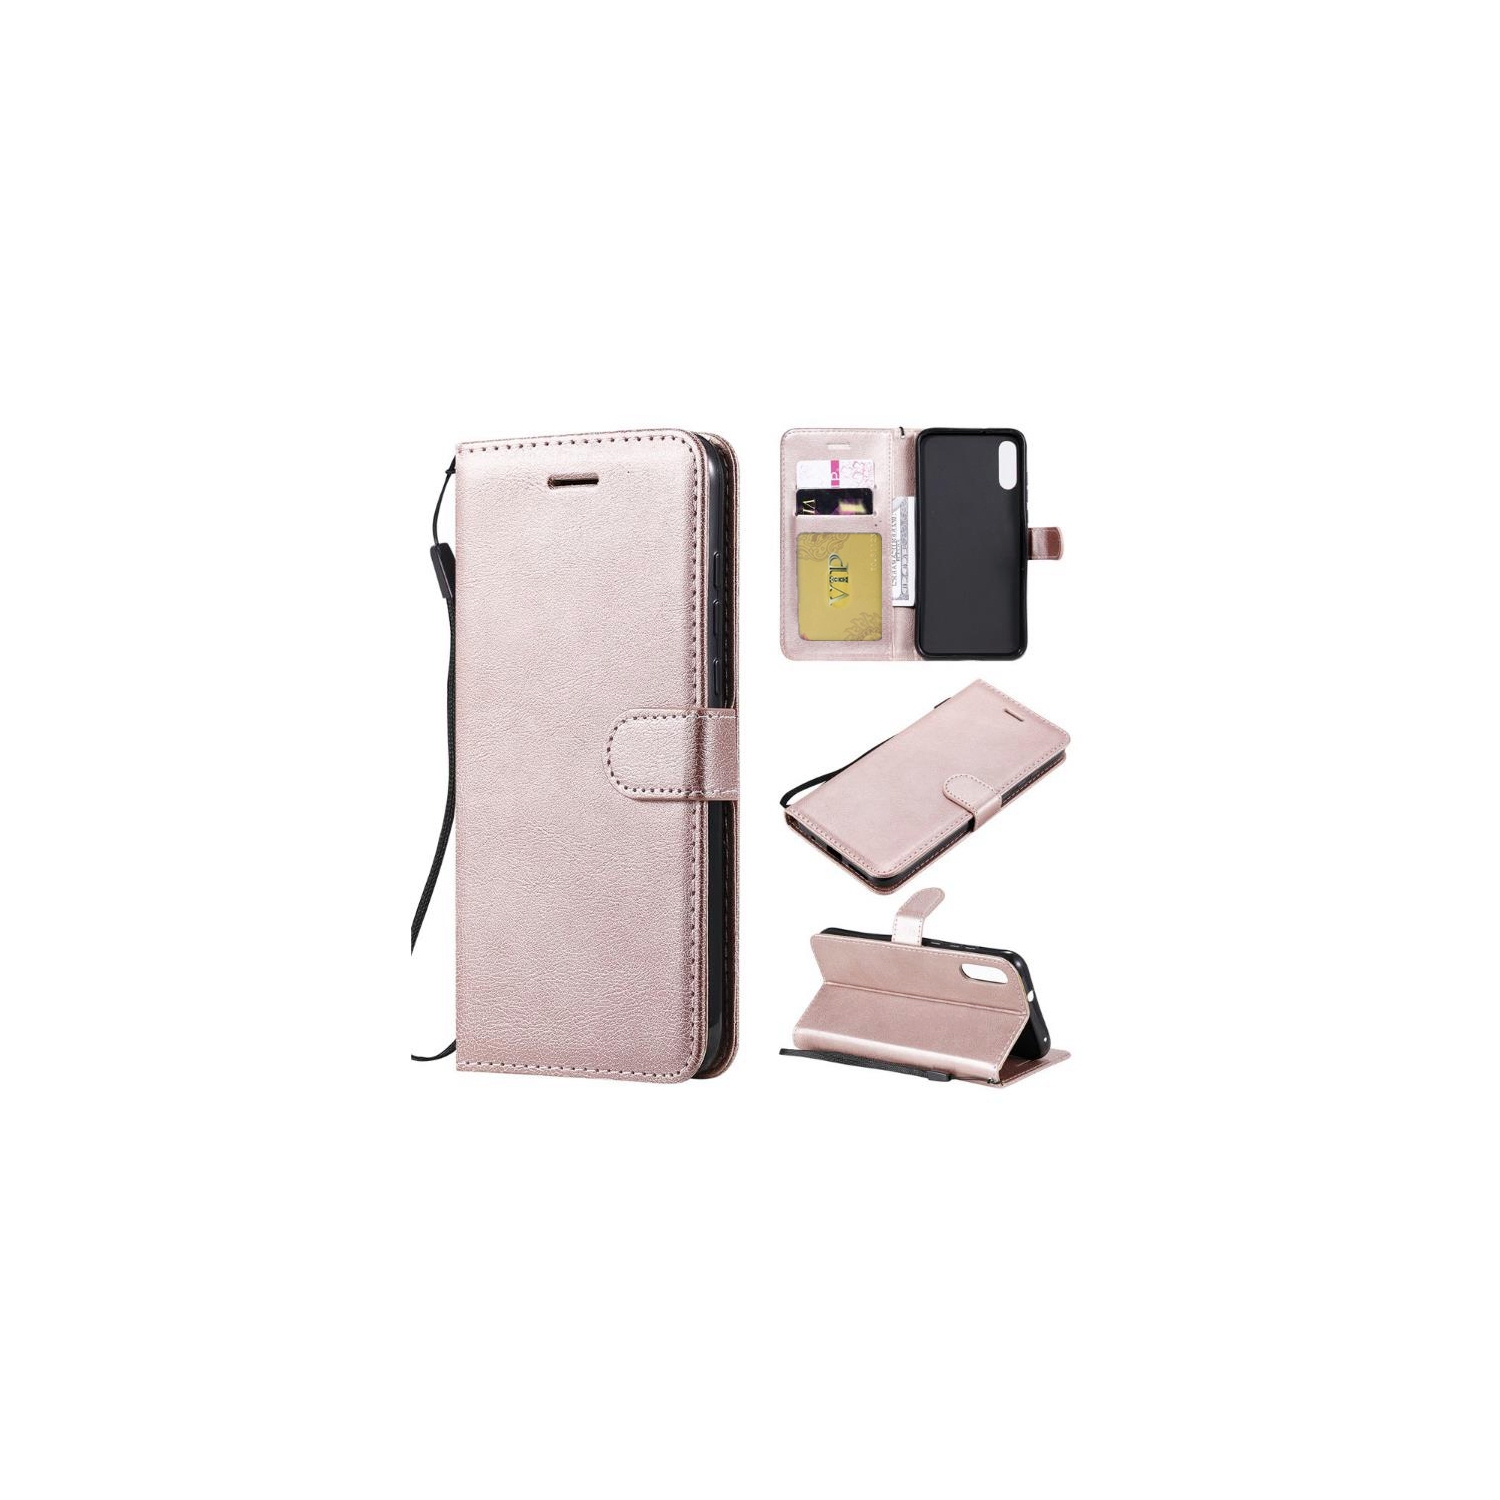 [CS] Motorola Moto E7 2020 Case, Magnetic Leather Folio Wallet Flip Case Cover with Card Slot, Rose Gold